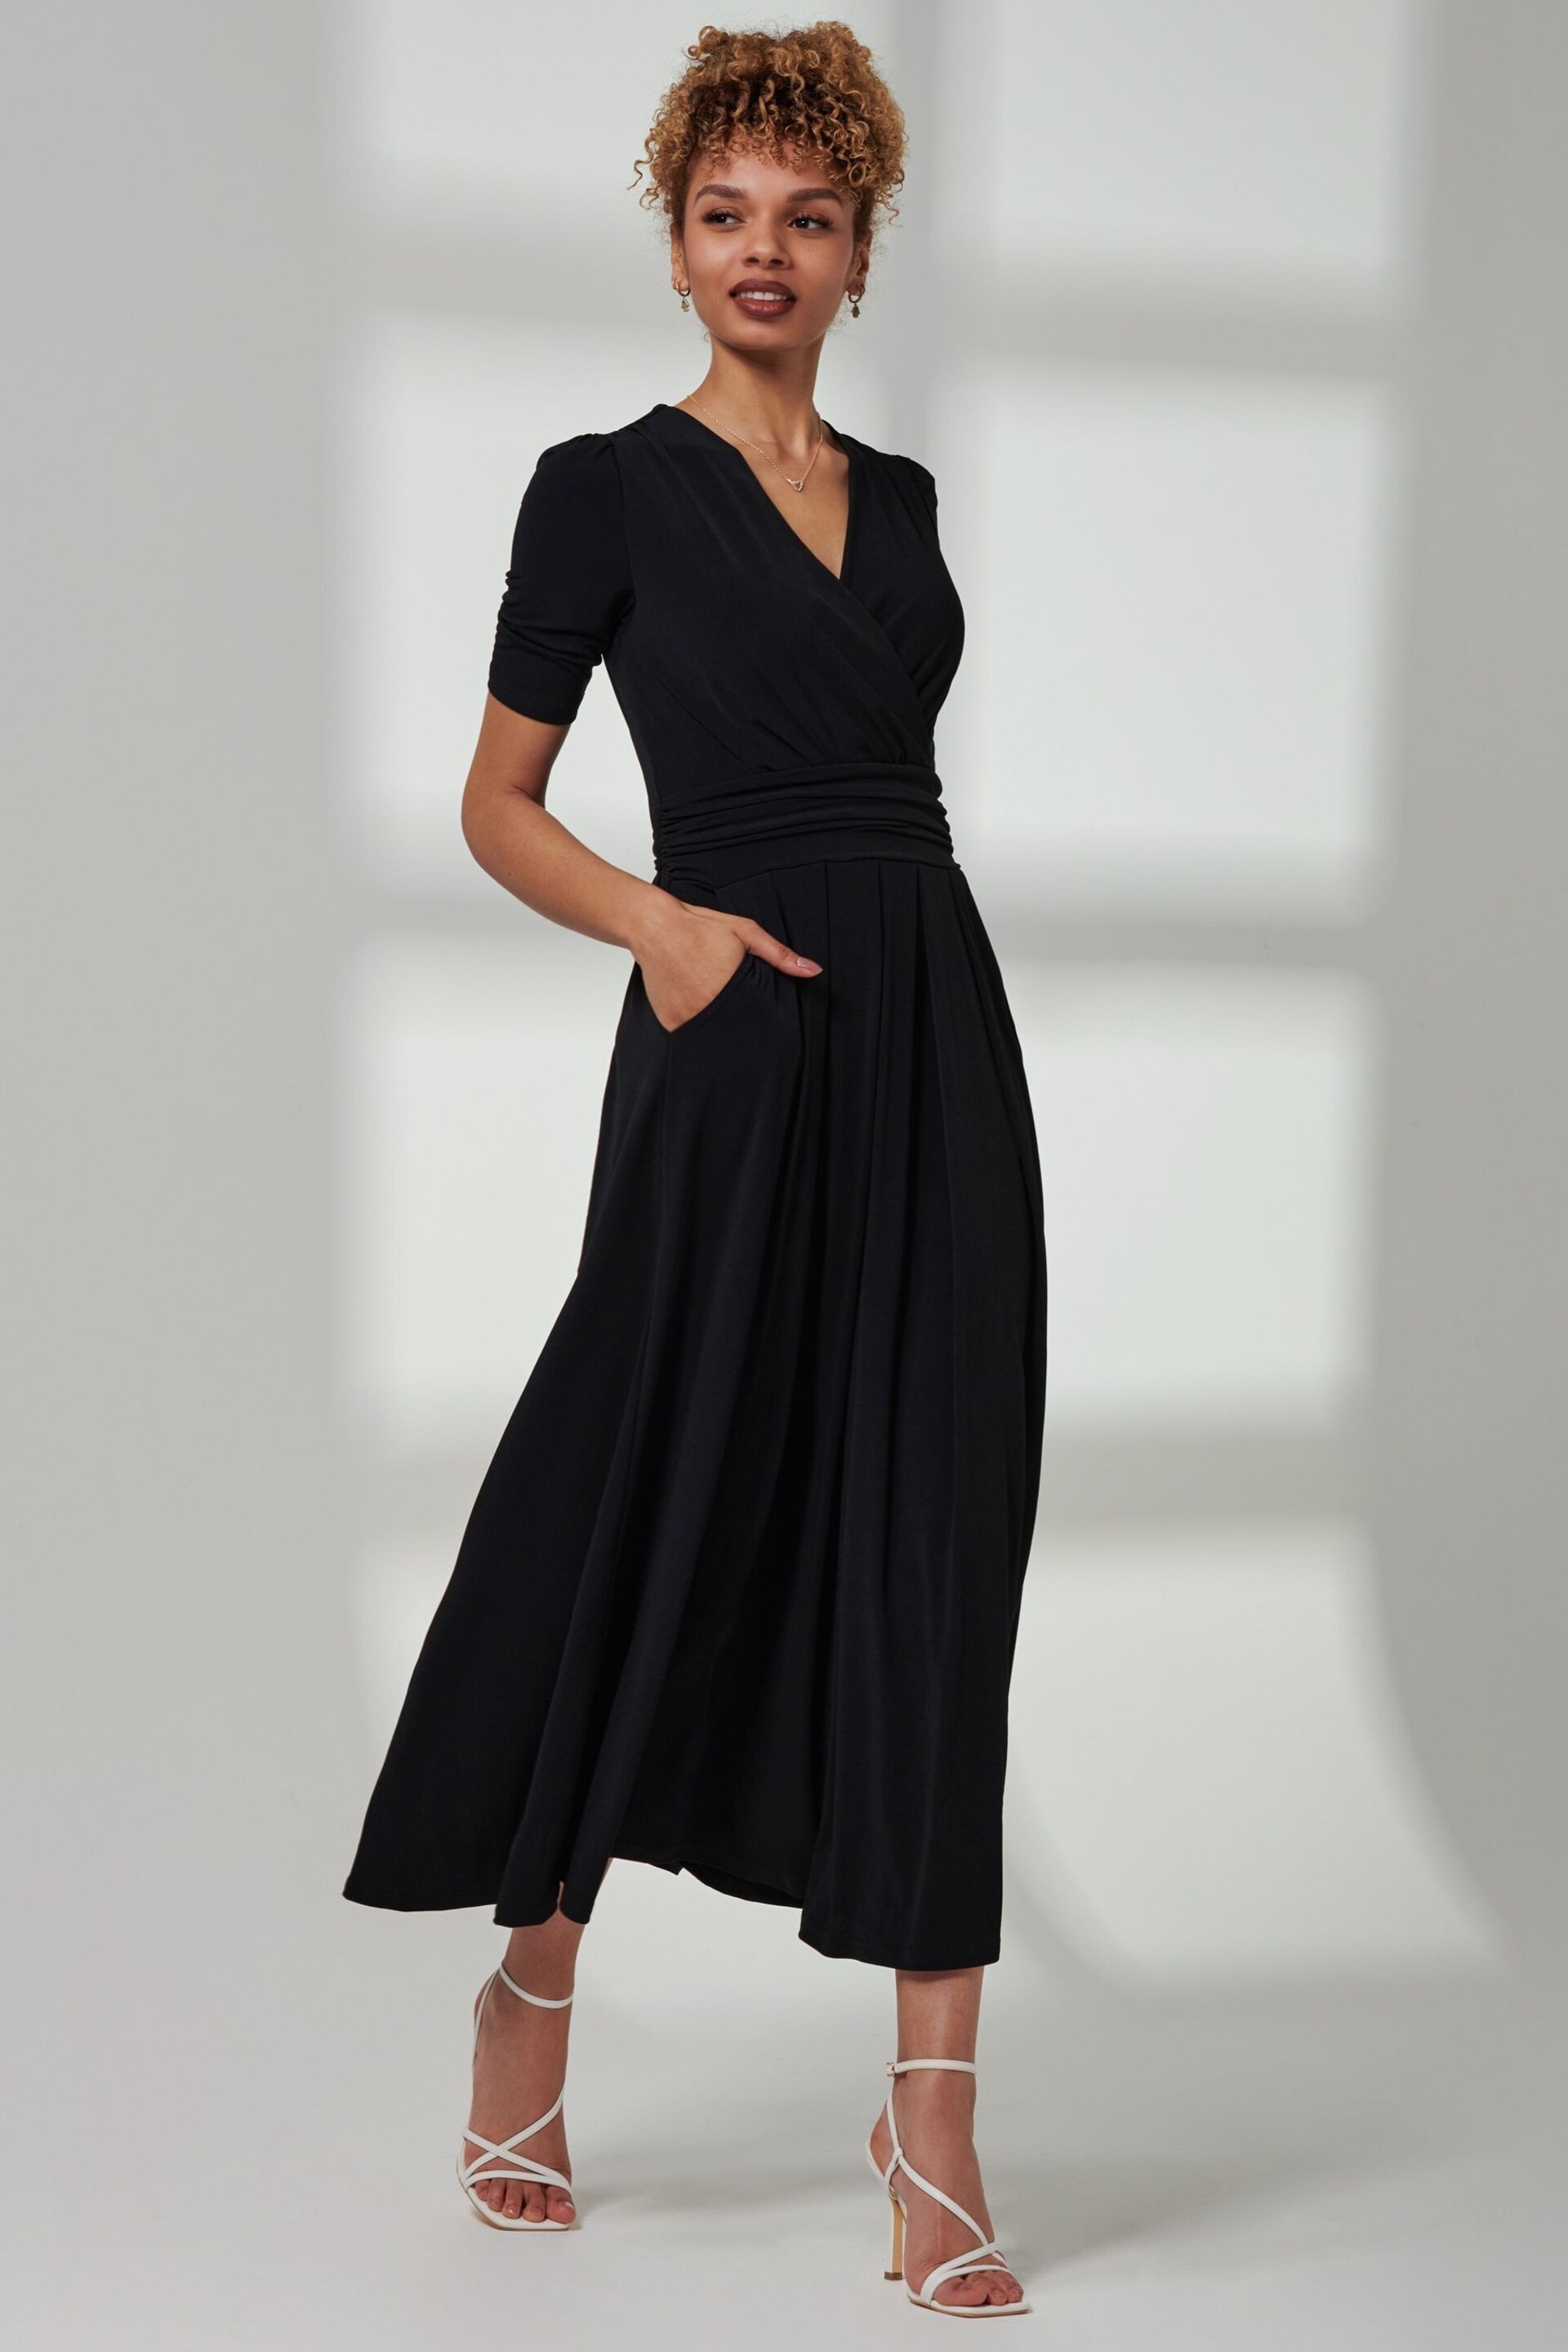 Jolie Moi Black Bree Half Sleeve Jersey Maxi Dress - Image 5 of 6